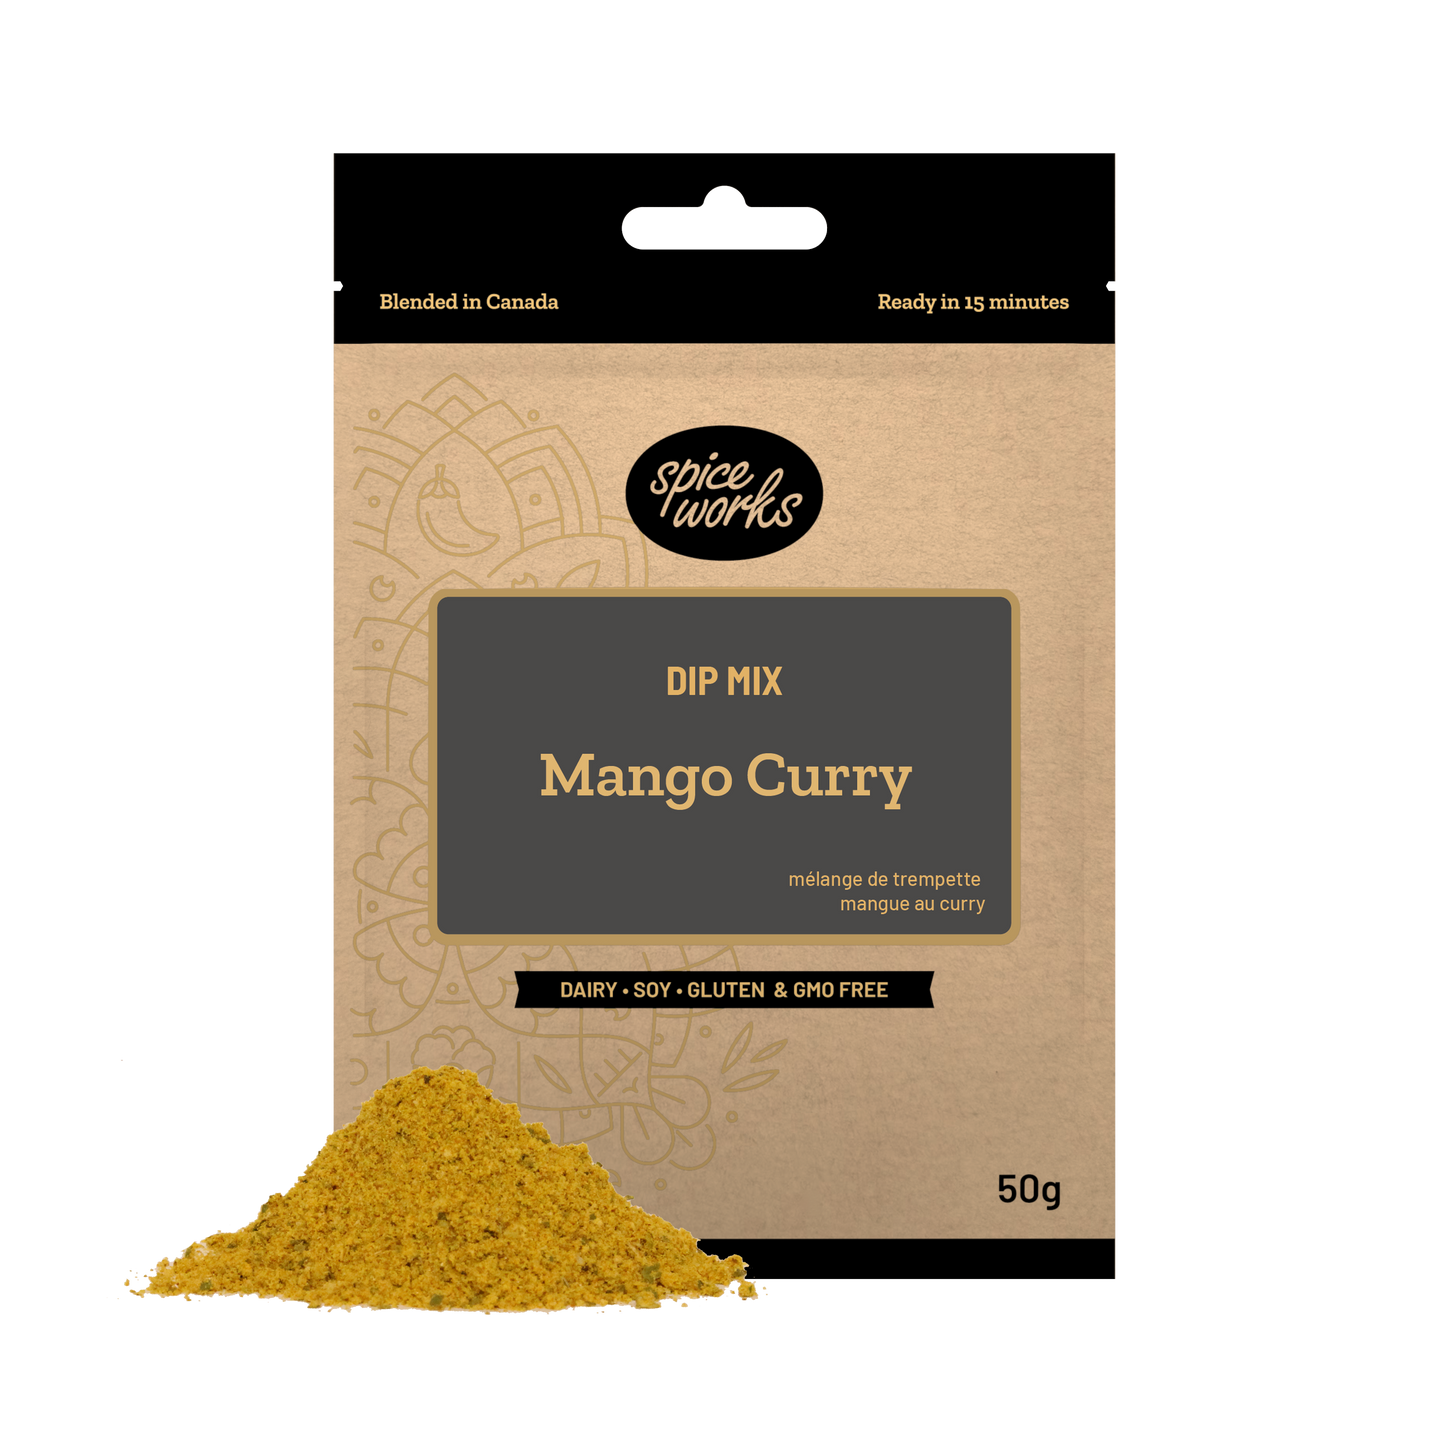 SPICE WORKS Mango Curry Dip